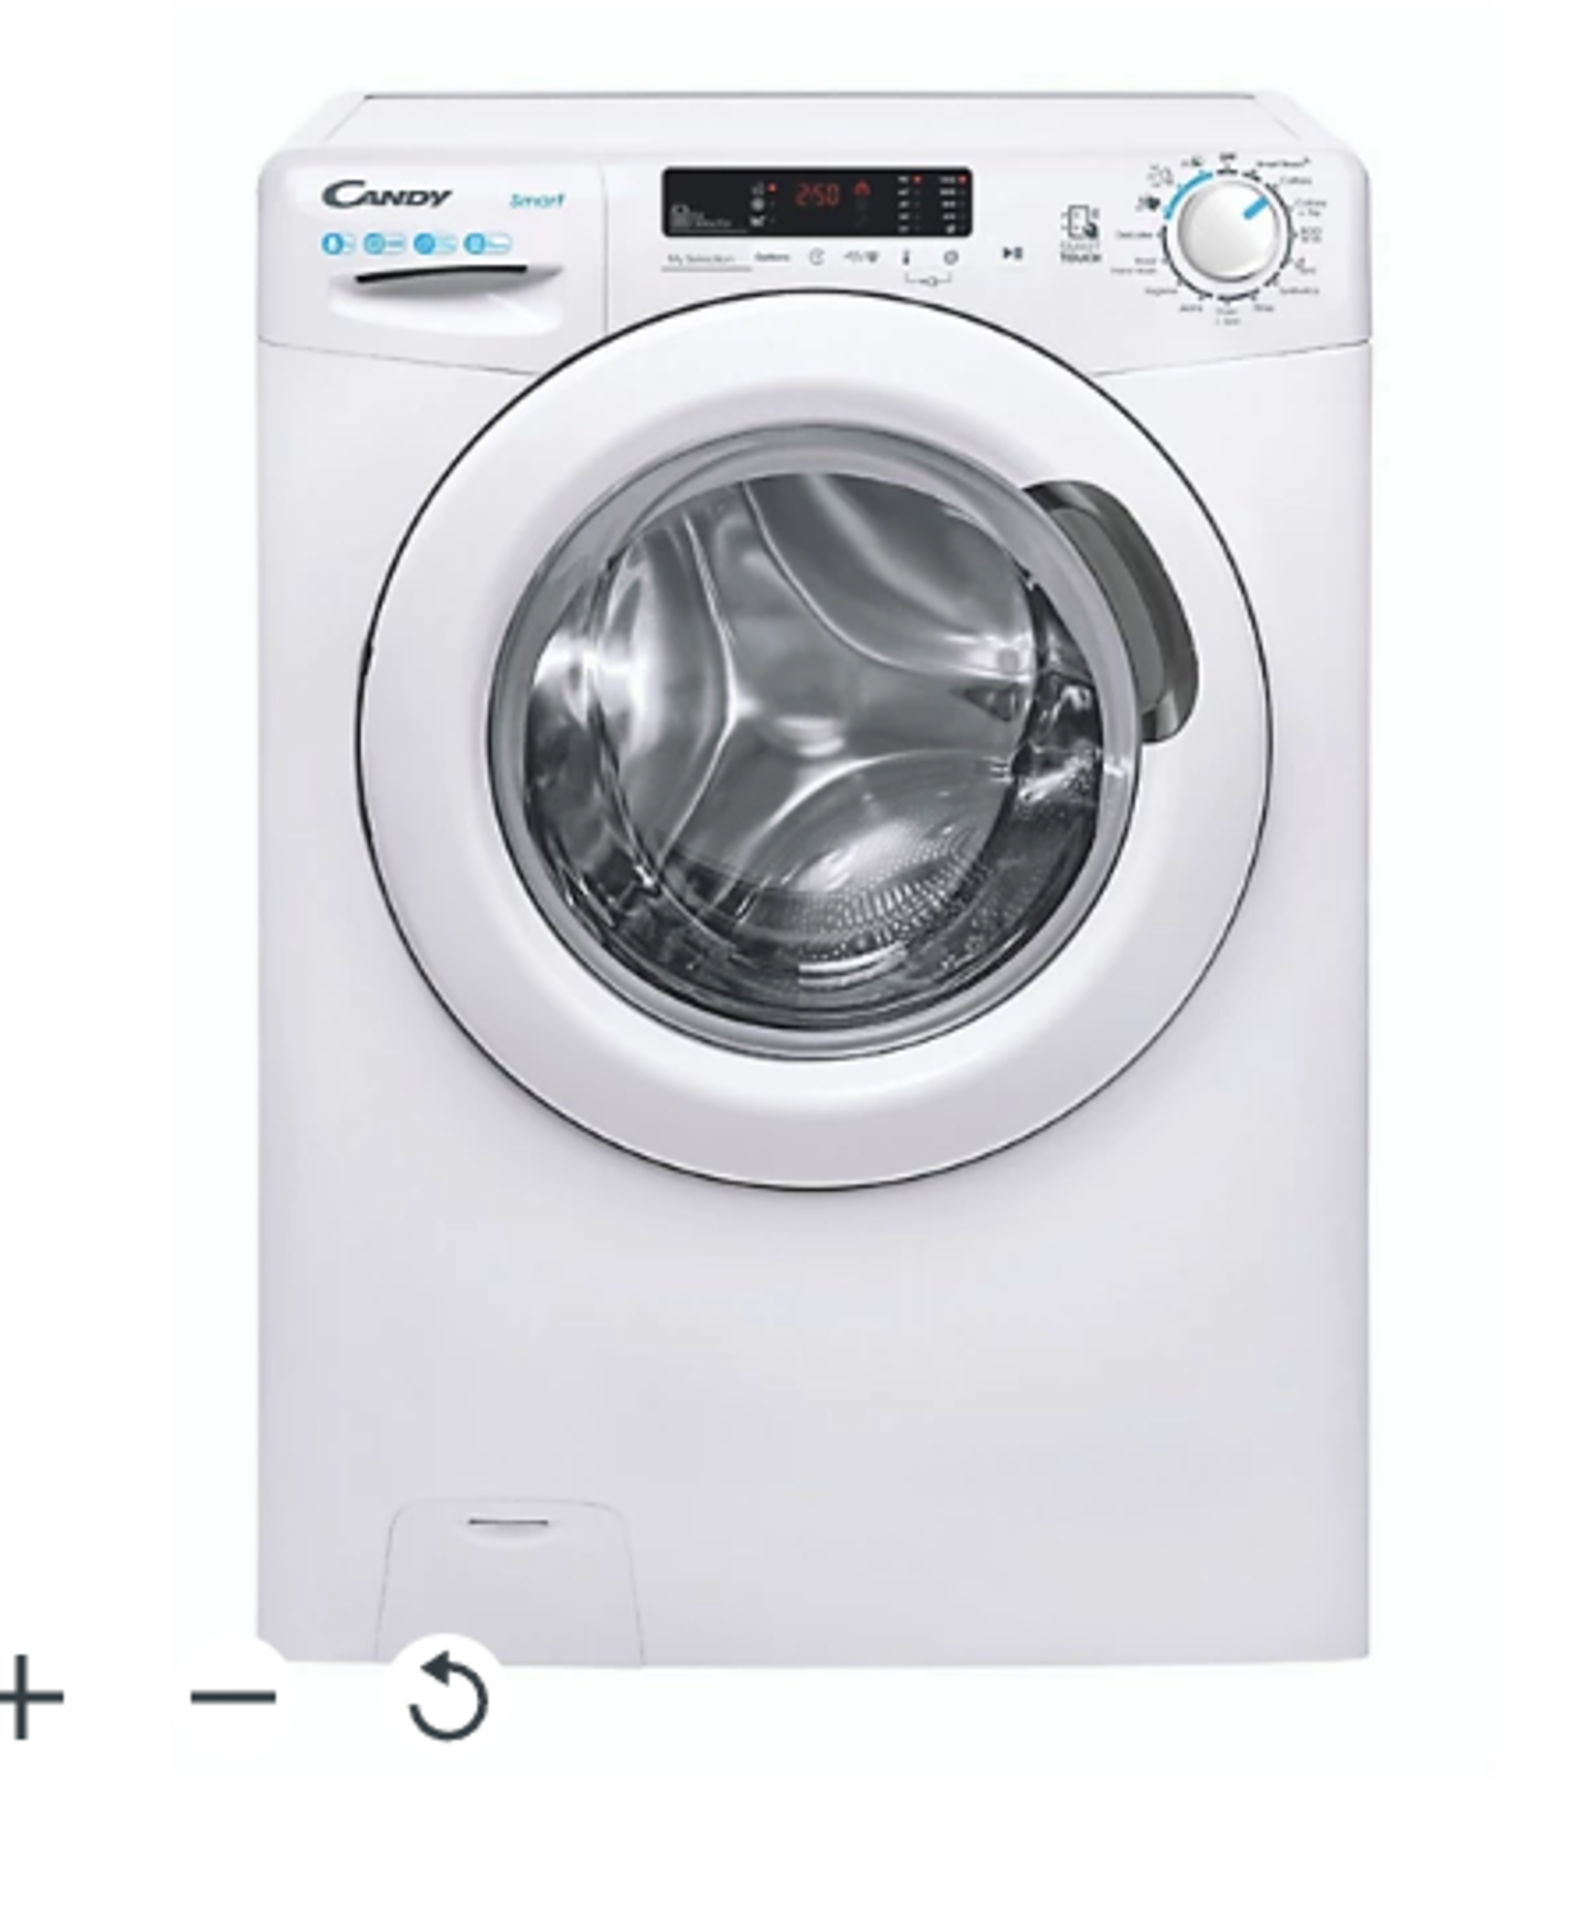 Candy CS 1482DE/1-80 8kg Freestanding 1400rpm Washing machine - White. - ER52. RRP £339.00. This